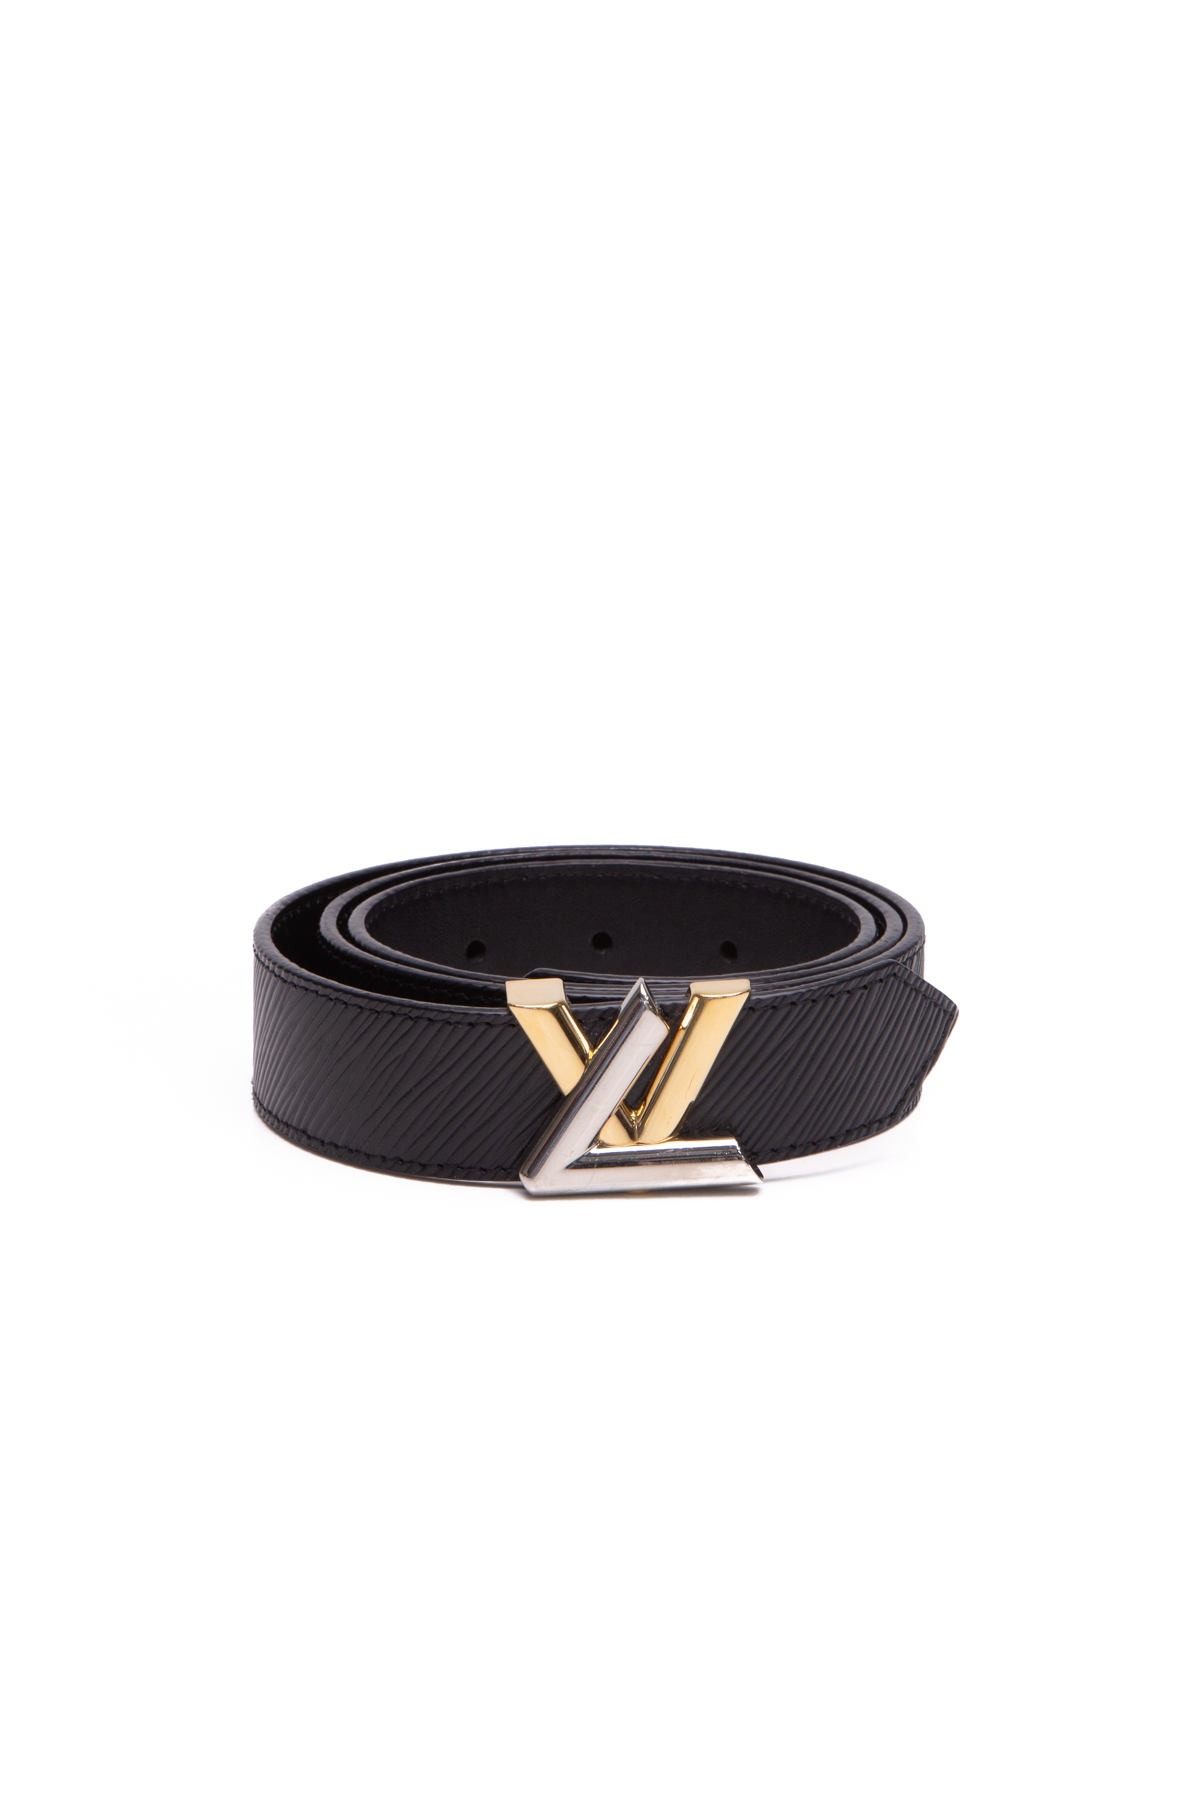 Louis Vuitton Calfskin Monogram 30mm LV Initiales Reversible Belt 85 34 Black